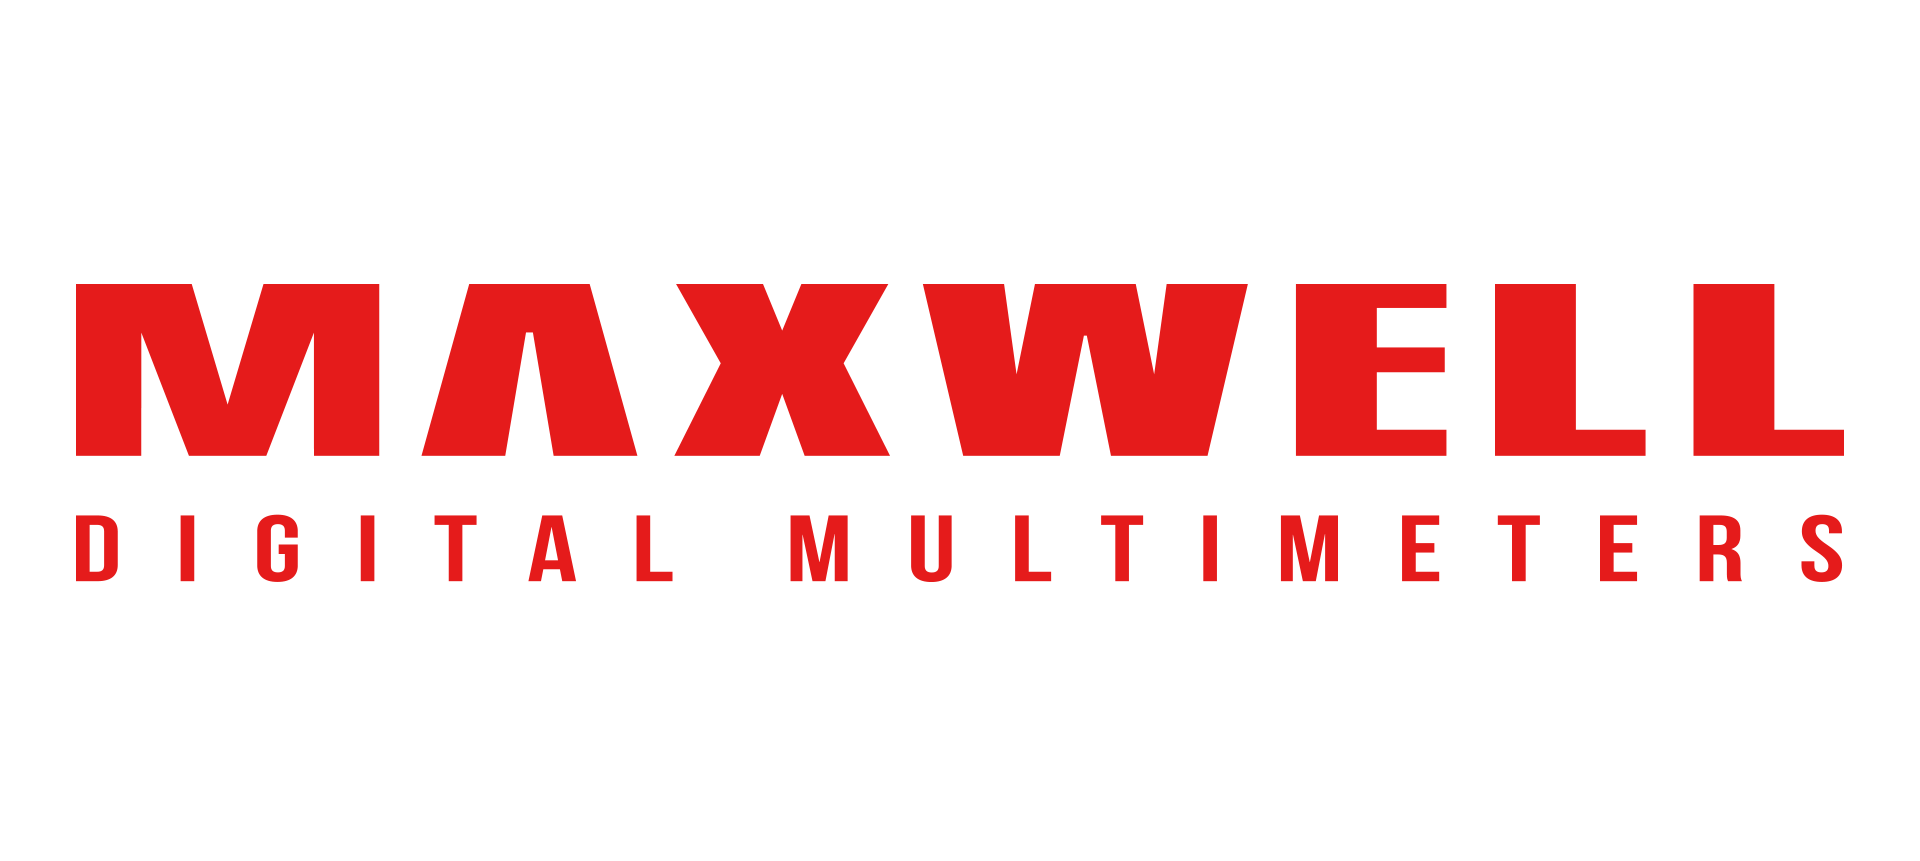 Maxwell-Digital